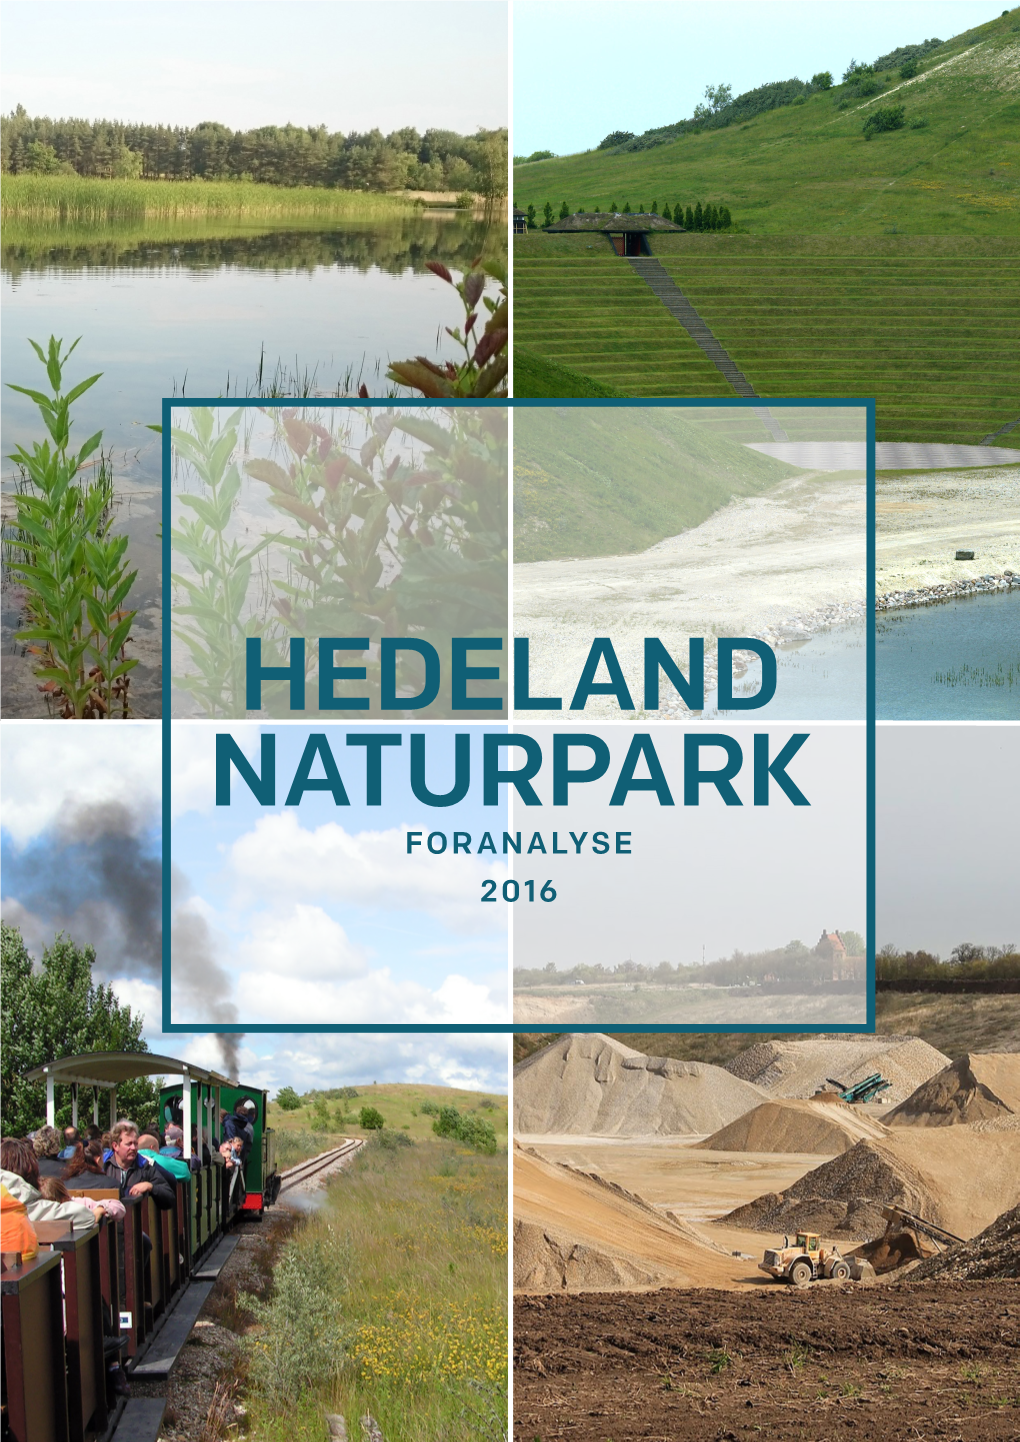 HEDELAND NATURPARK FORANALYSE 2016 HEDELAND NATURPARK Foranalyse 2016